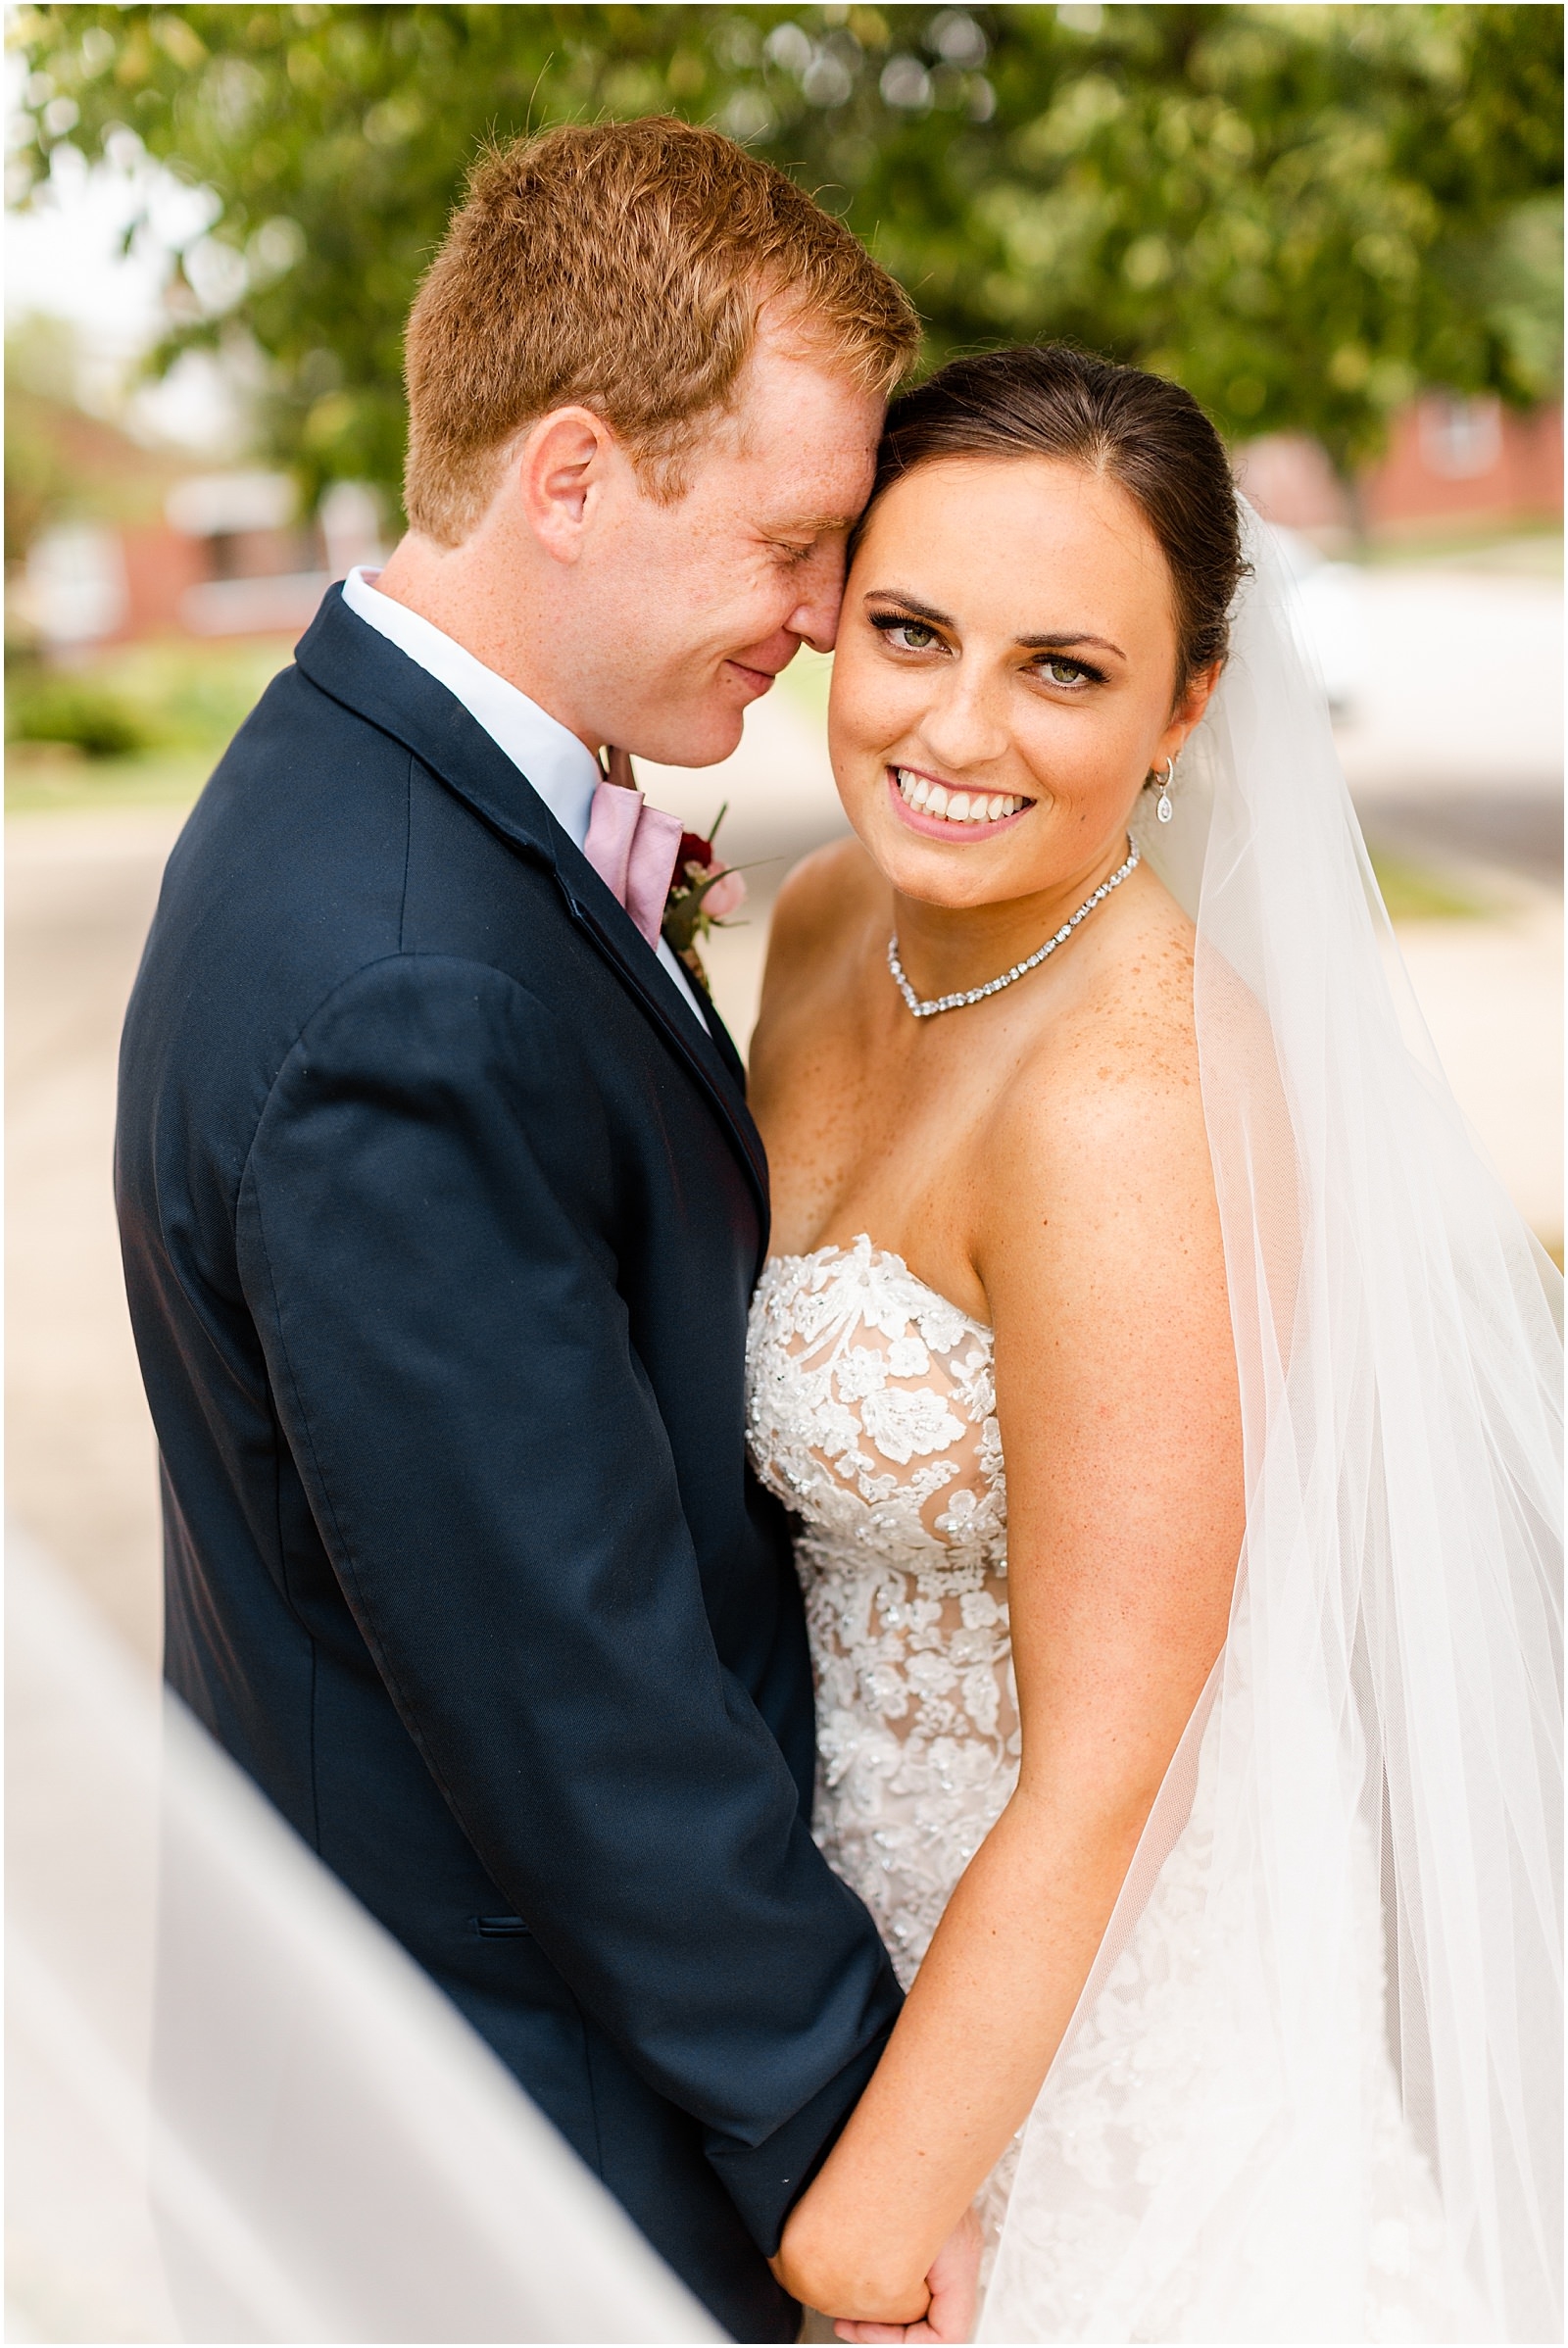 Deidra and Andrew | A Huntingburgh Indiana Wedding Bret and Brandie | Evansville Photographers | @bretandbrandie-0052.jpg